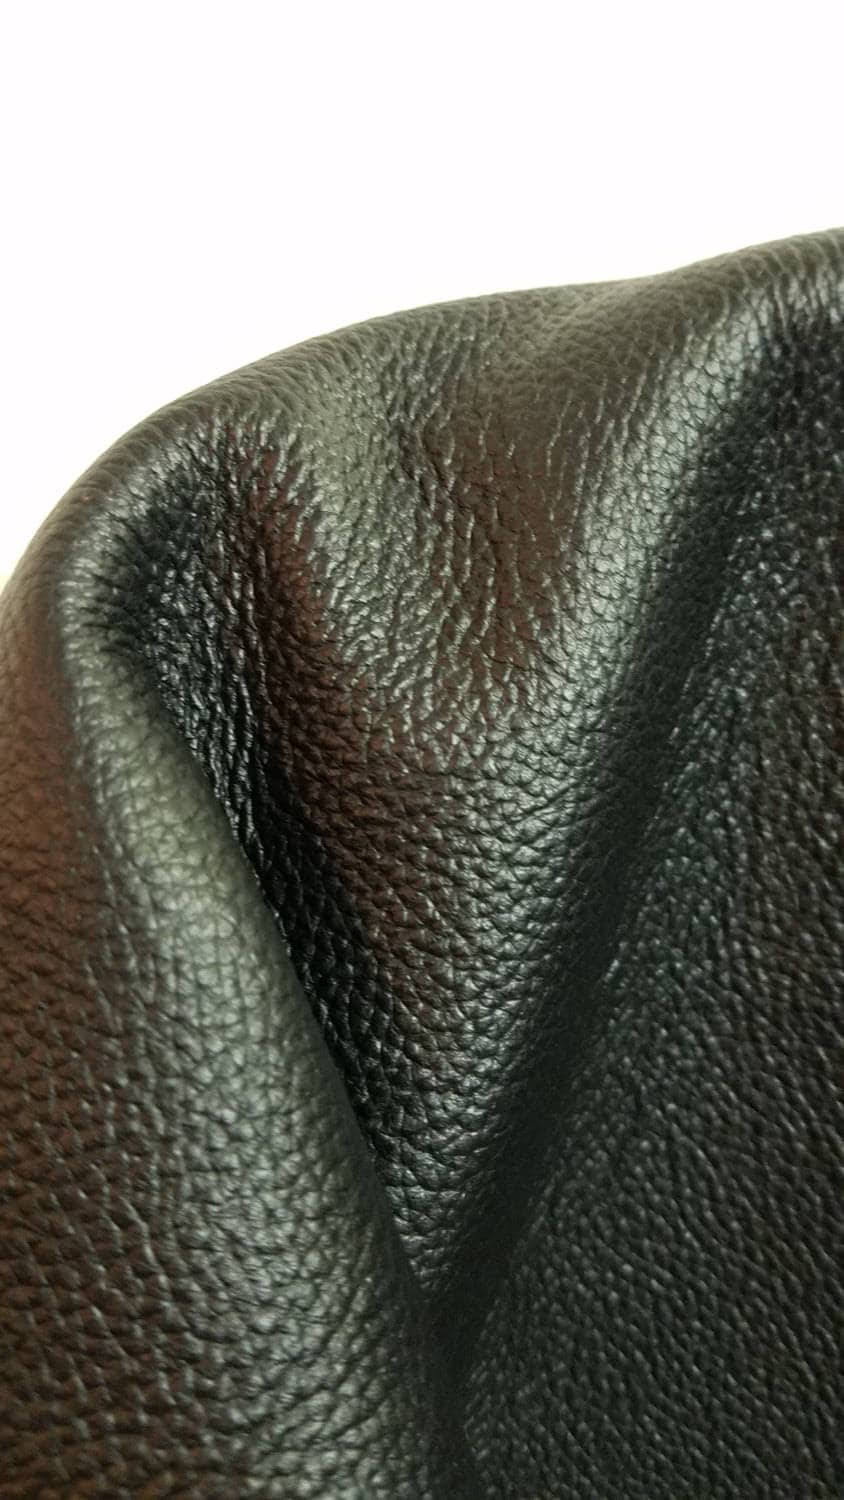  NAT Leathers Black 2.5 Oz Italian Smooth 2.0 oz Crafting  Cowhide Genuine Leather Hide Skin 2 Square Feet (12 x 24)